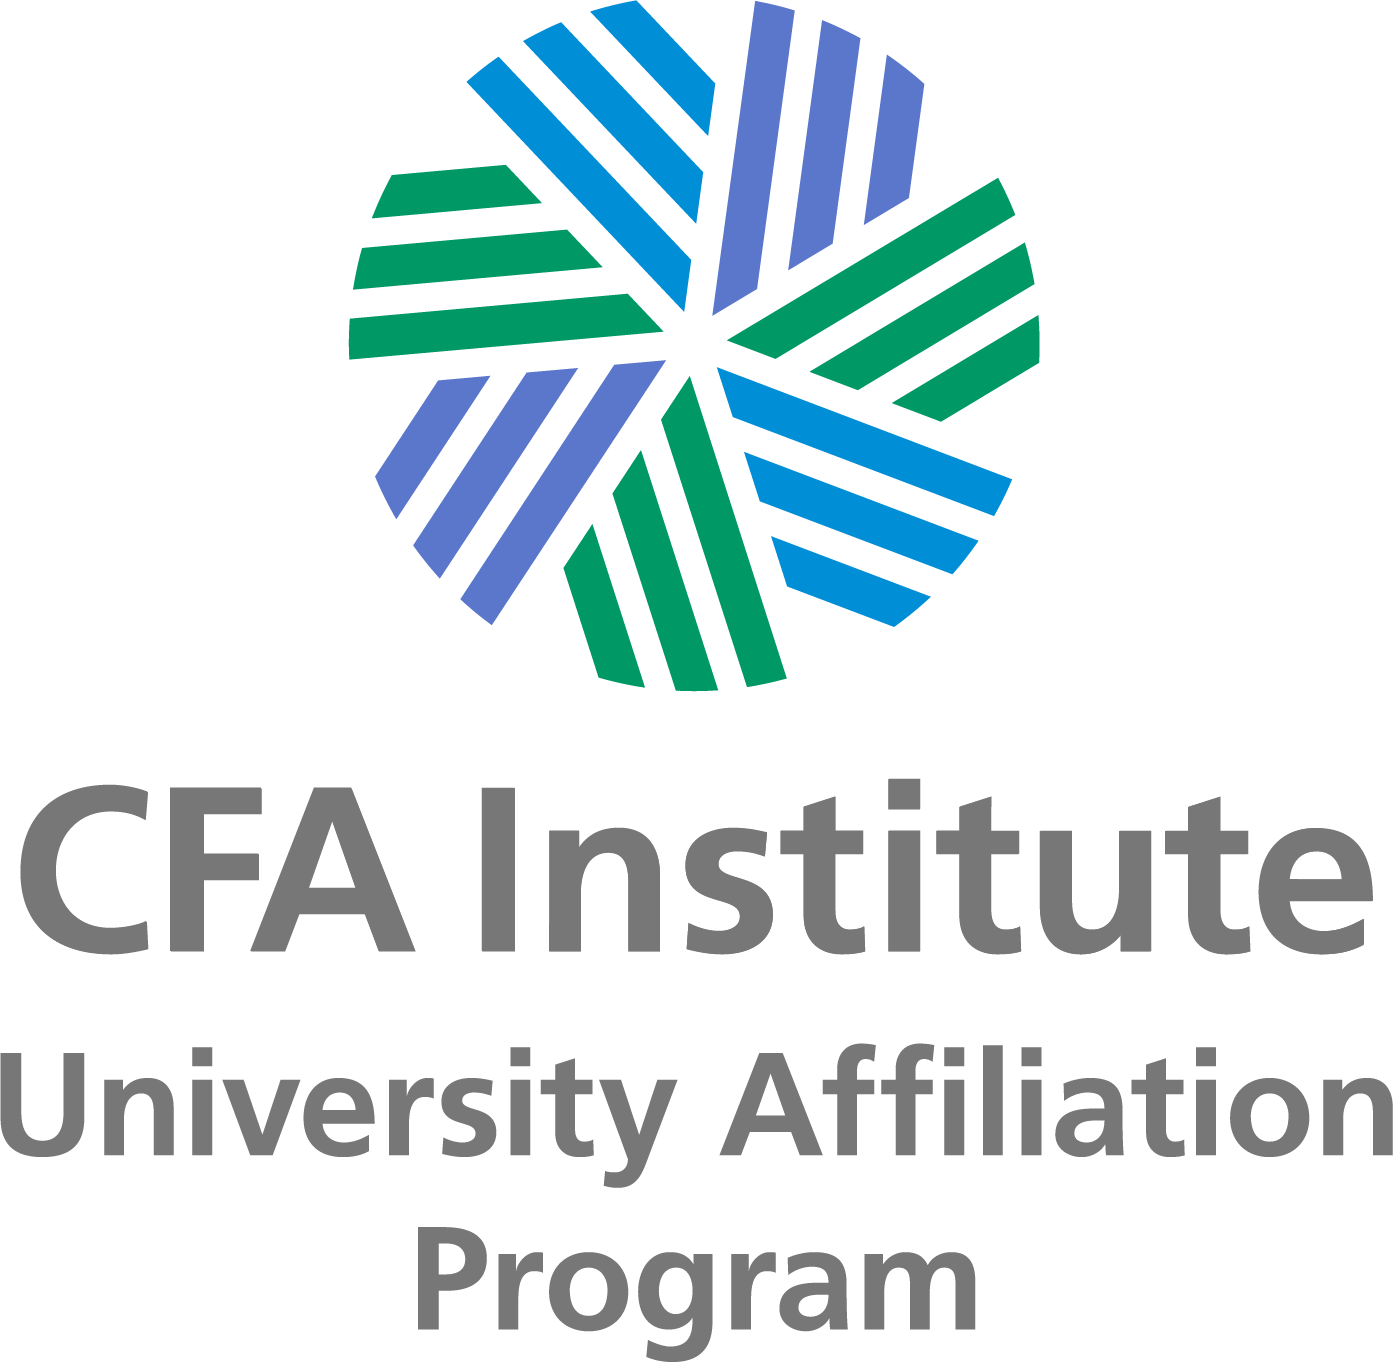 cfa university affiliation program logo